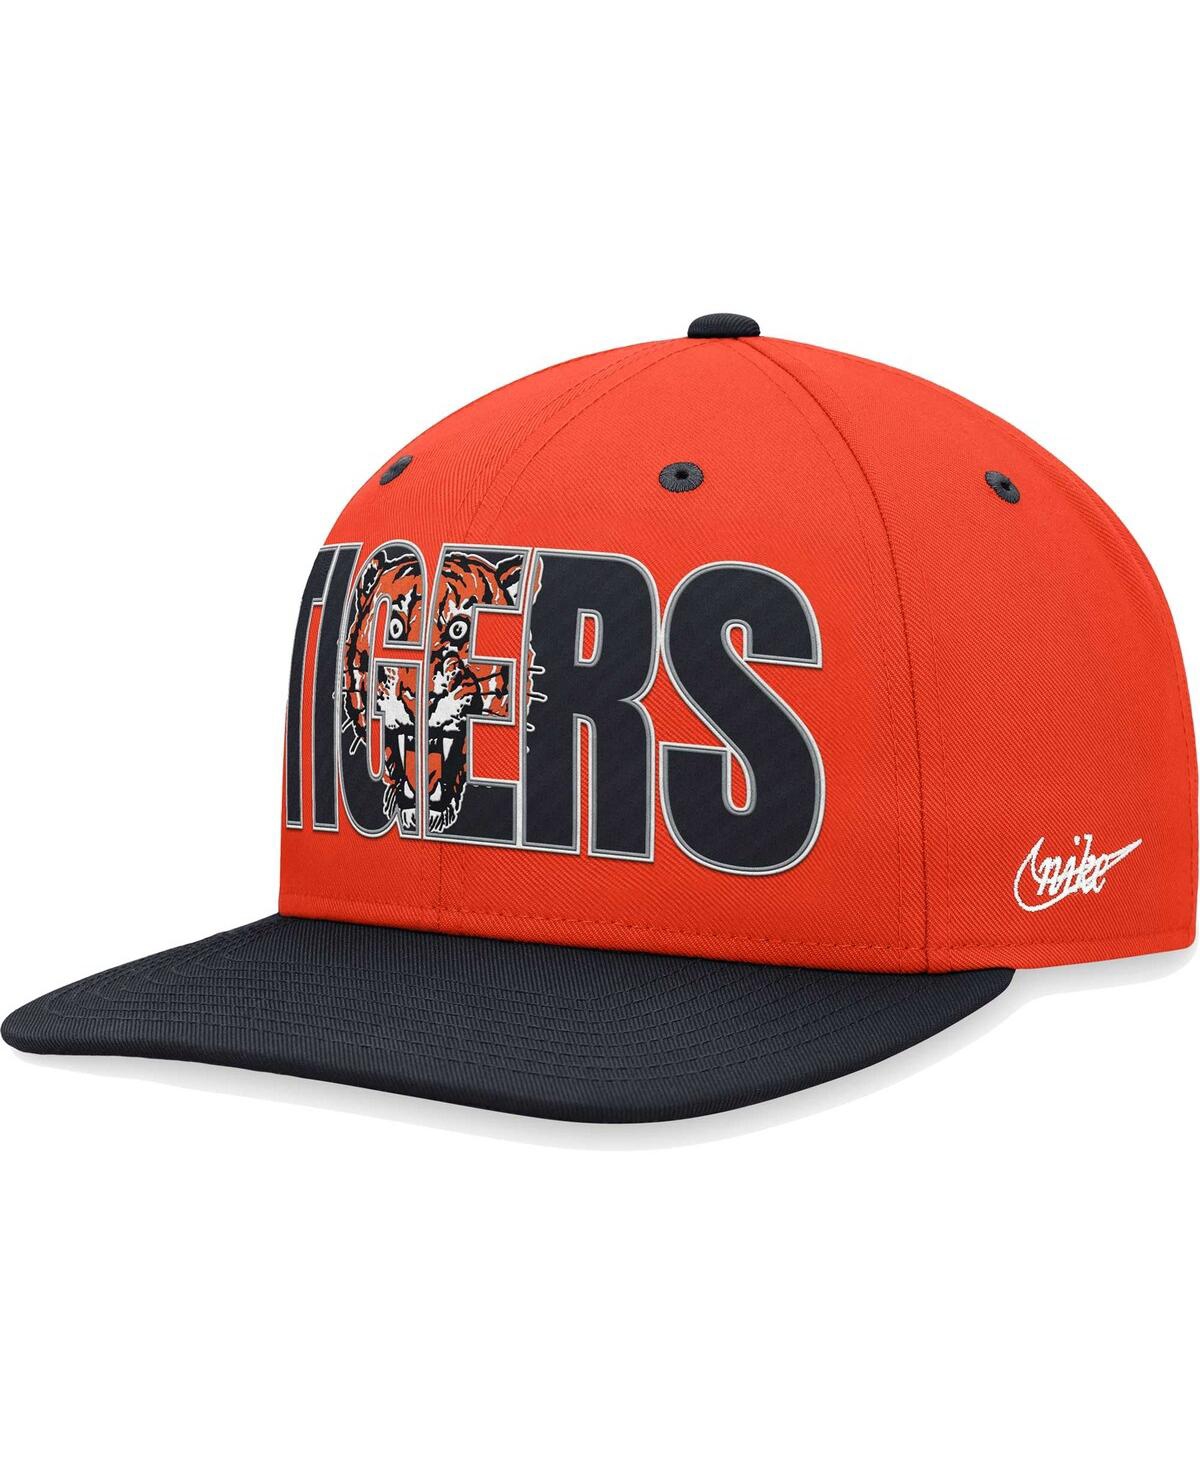 Nike Men's  Orange Detroit Tigers Cooperstown Collection Pro Snapback Hat